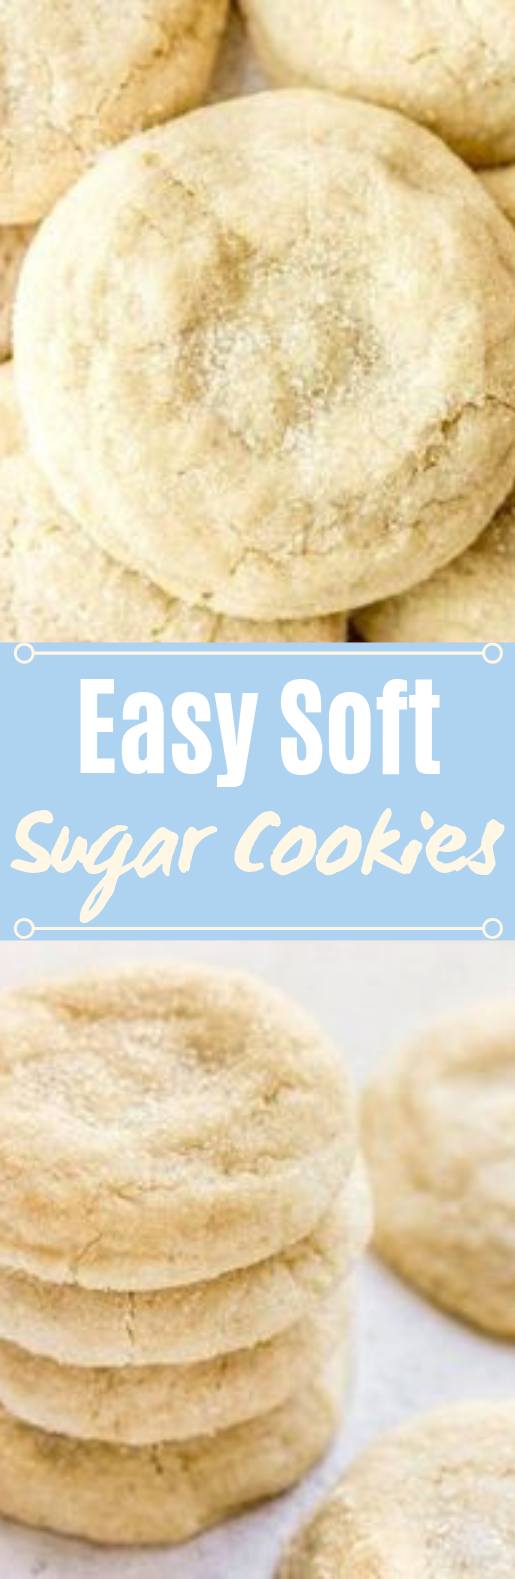 Soft Sugar Cookie #desserts #cookies